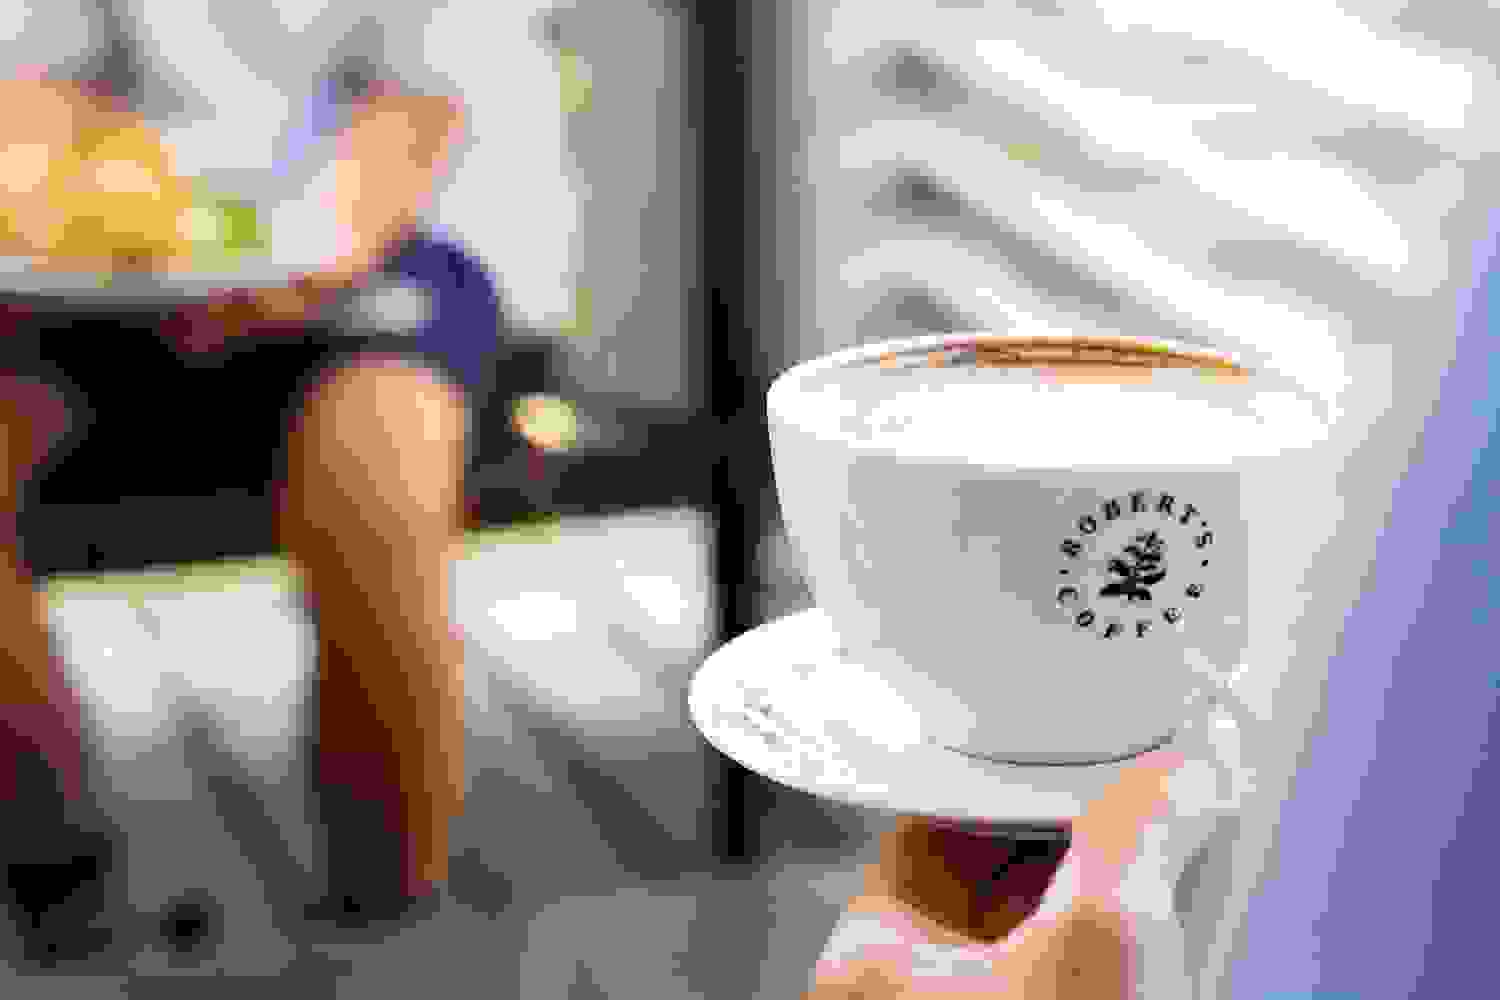 hcr-saimaa-roberts-coffee-1500x1000.jpg